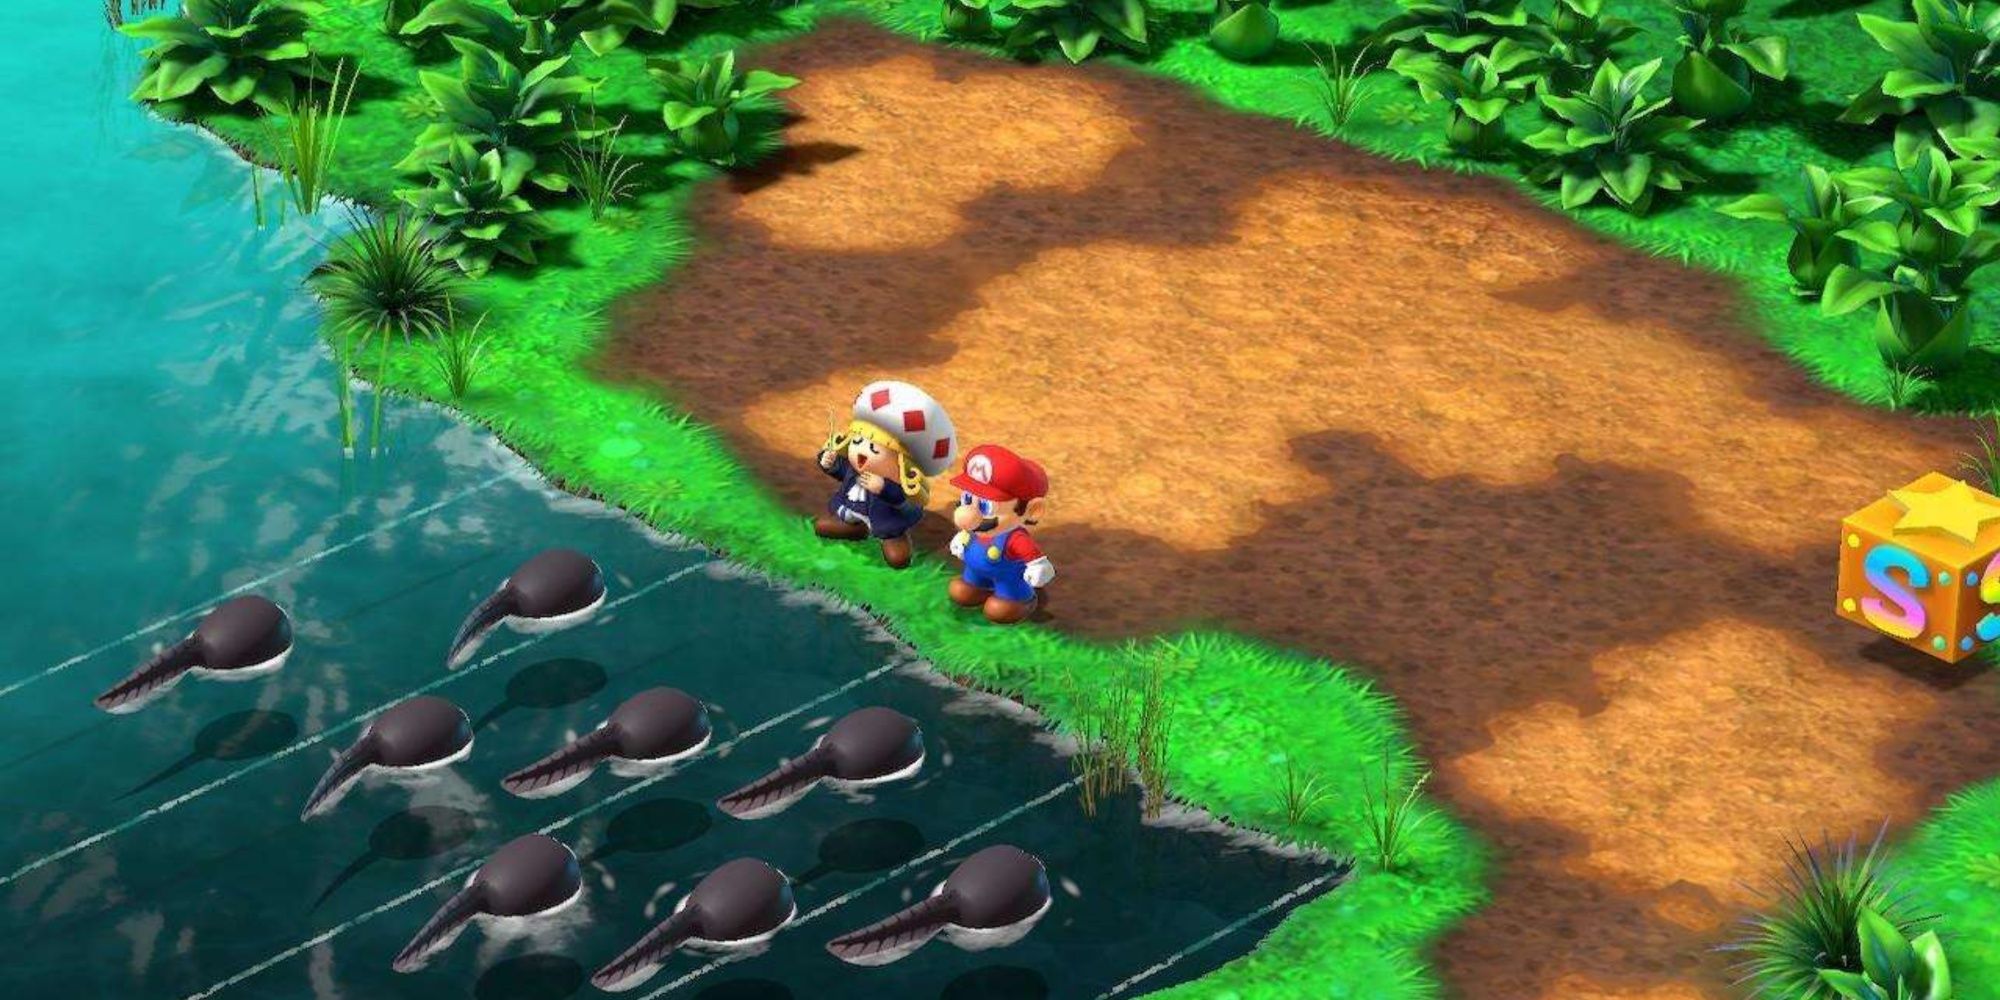 Mario Looking At A Group Of Tadpoles